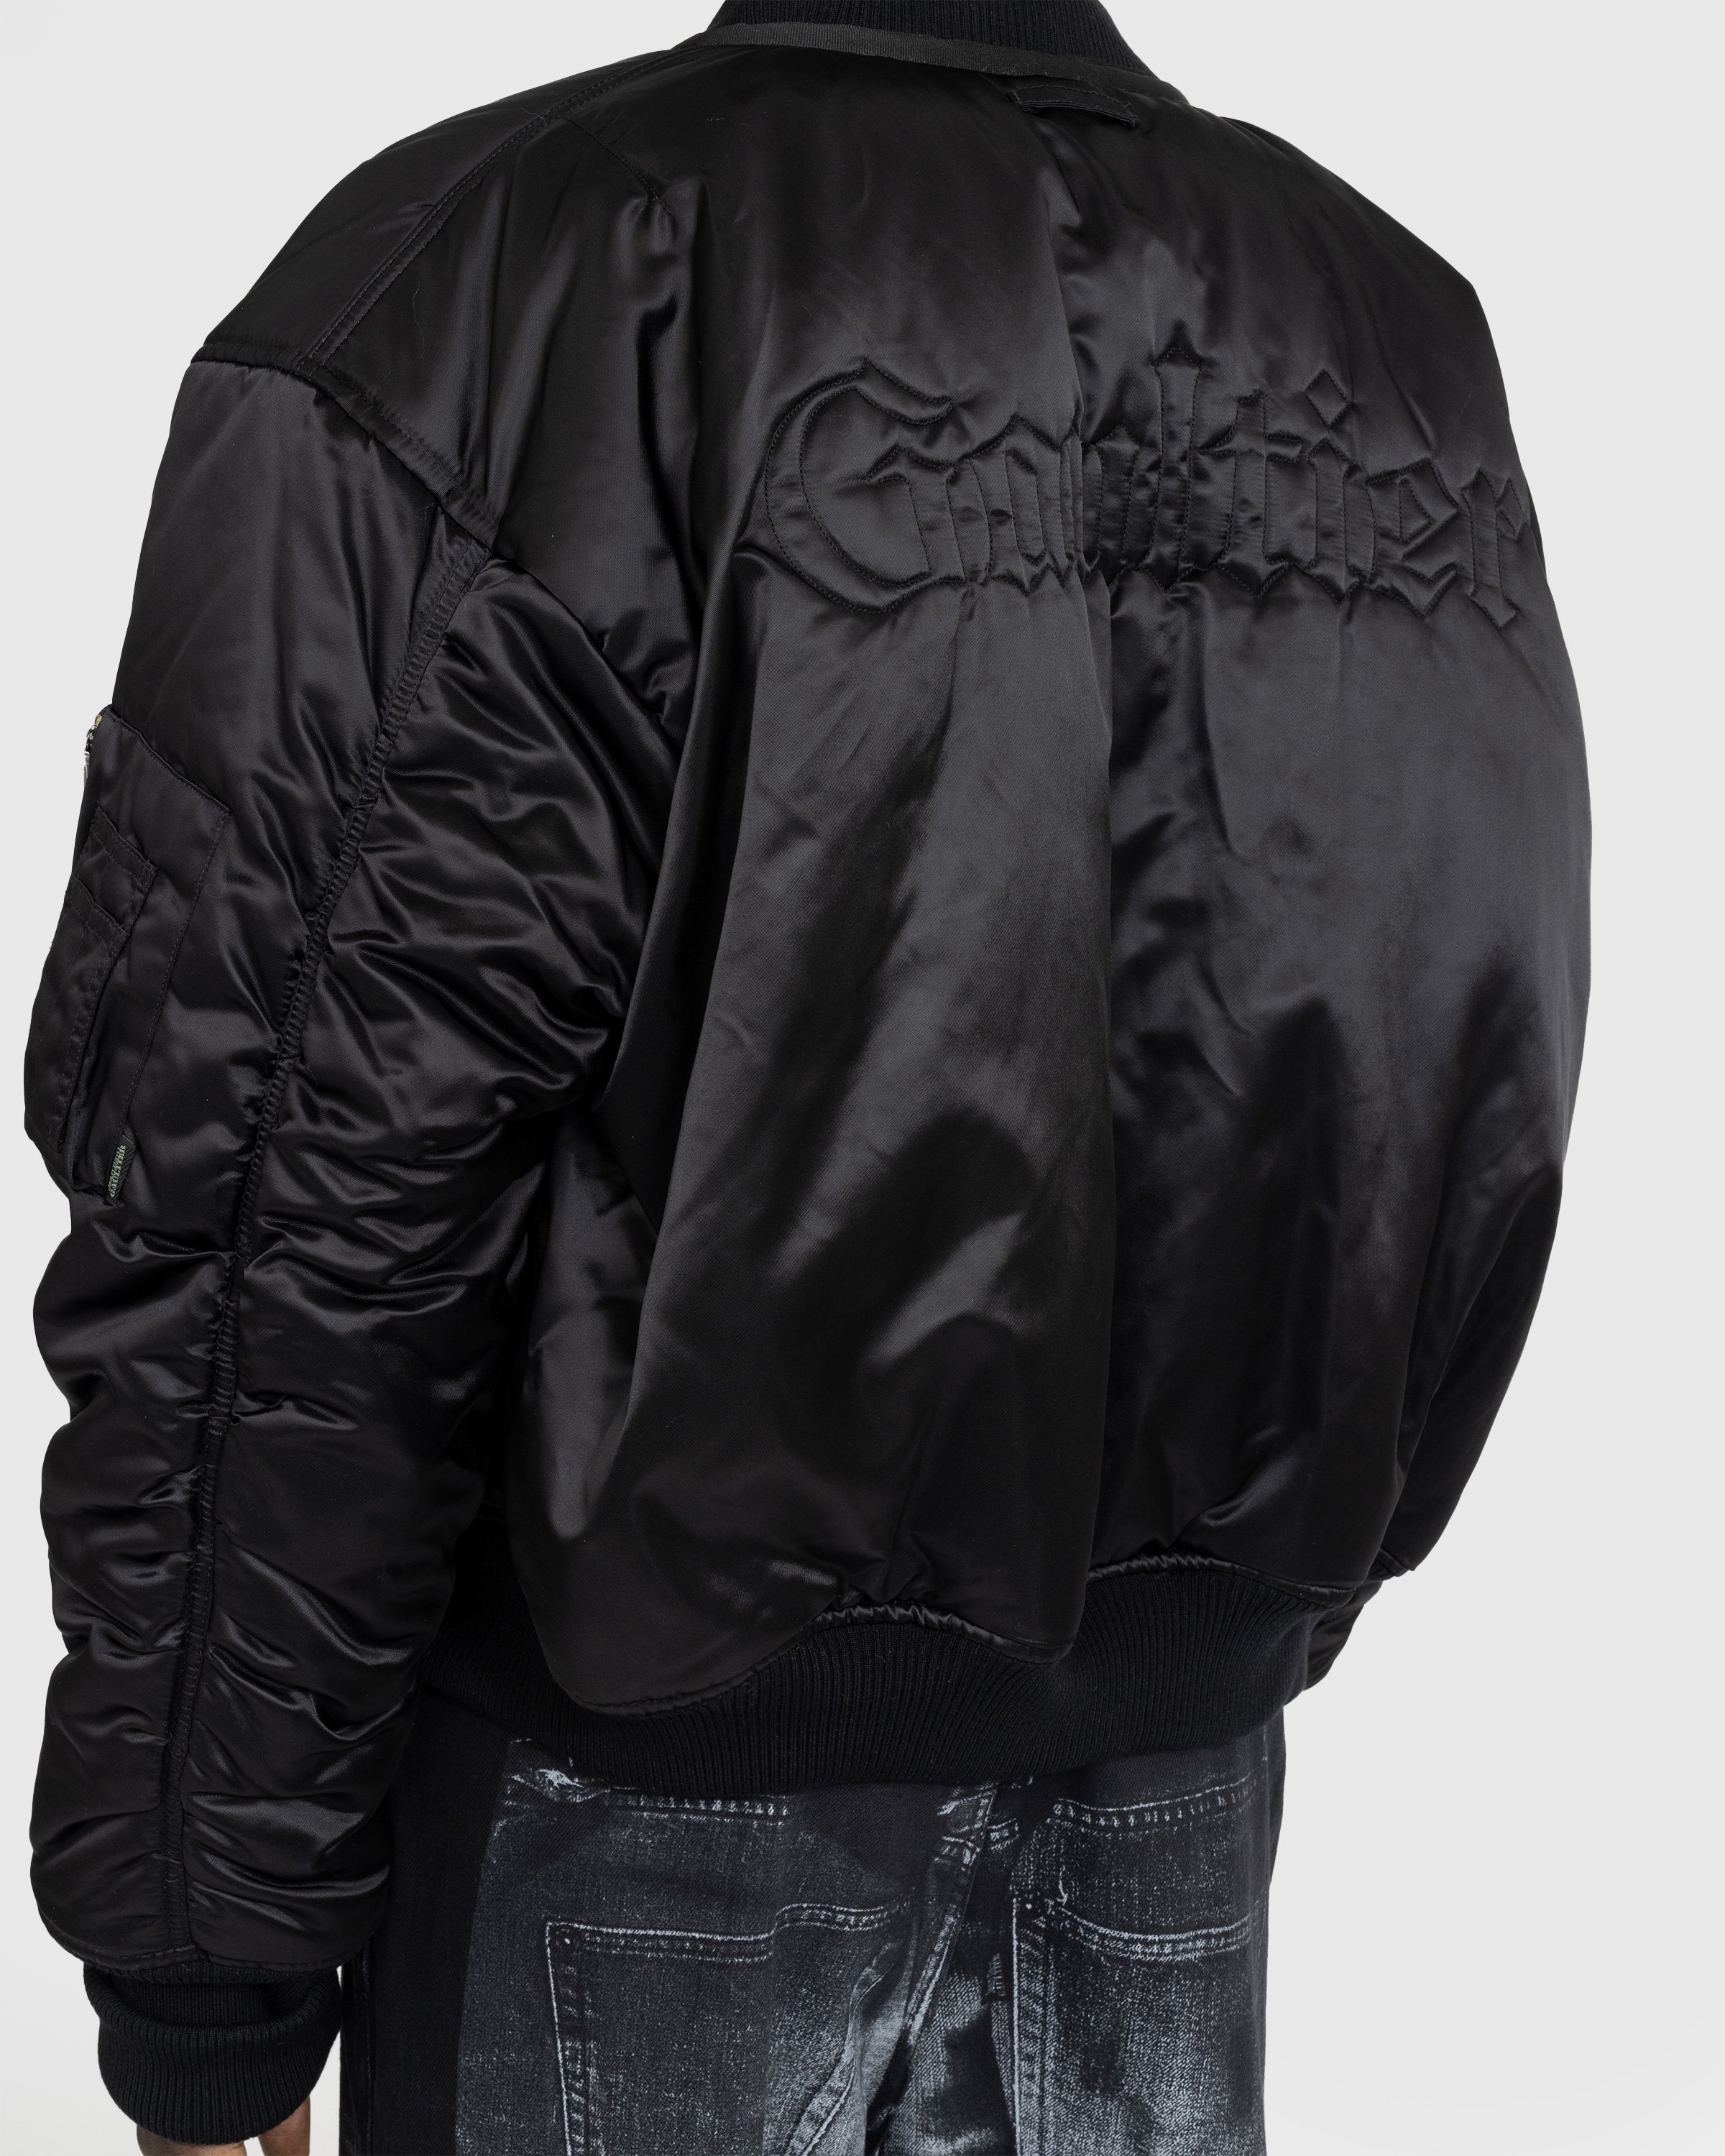 Jean Paul Gaultier - Oversized Satin Bomber Jacket Black/Grey - Clothing - Black - Image 5